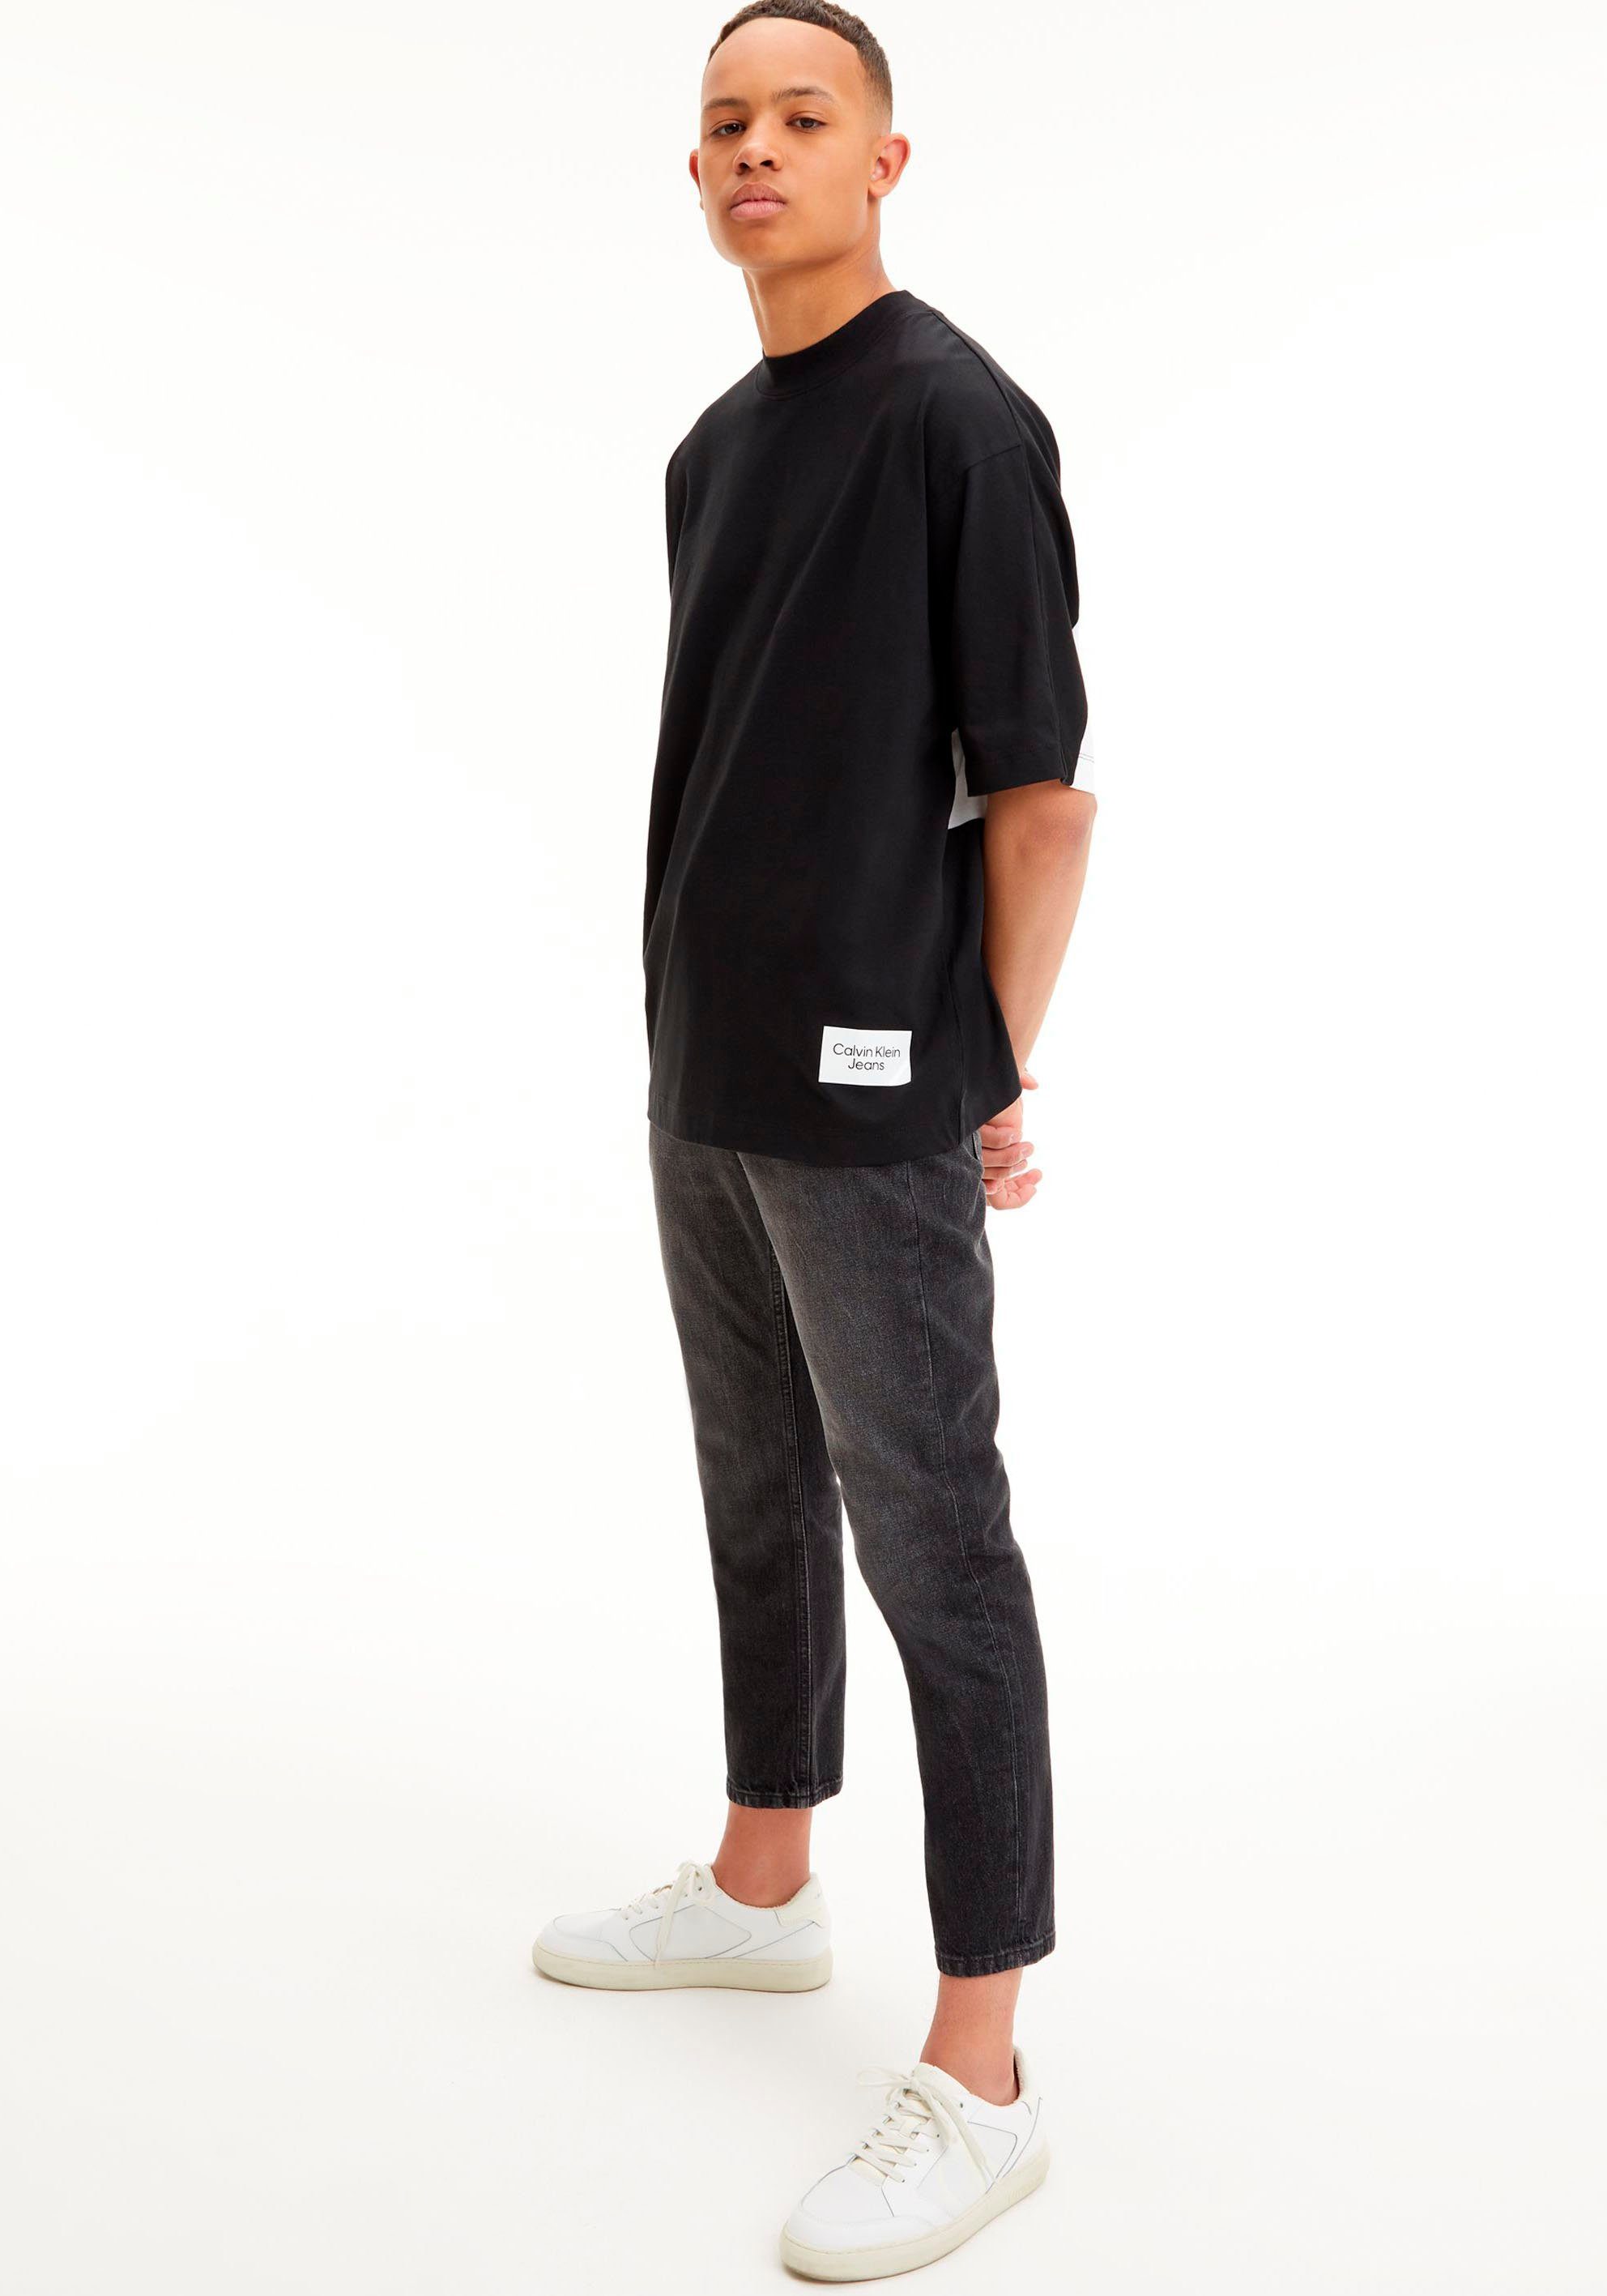 Calvin Klein Jeans mit Ck Rundhalsausschnitt BOLD T-Shirt TEE LOGO COLORBLOCK Black